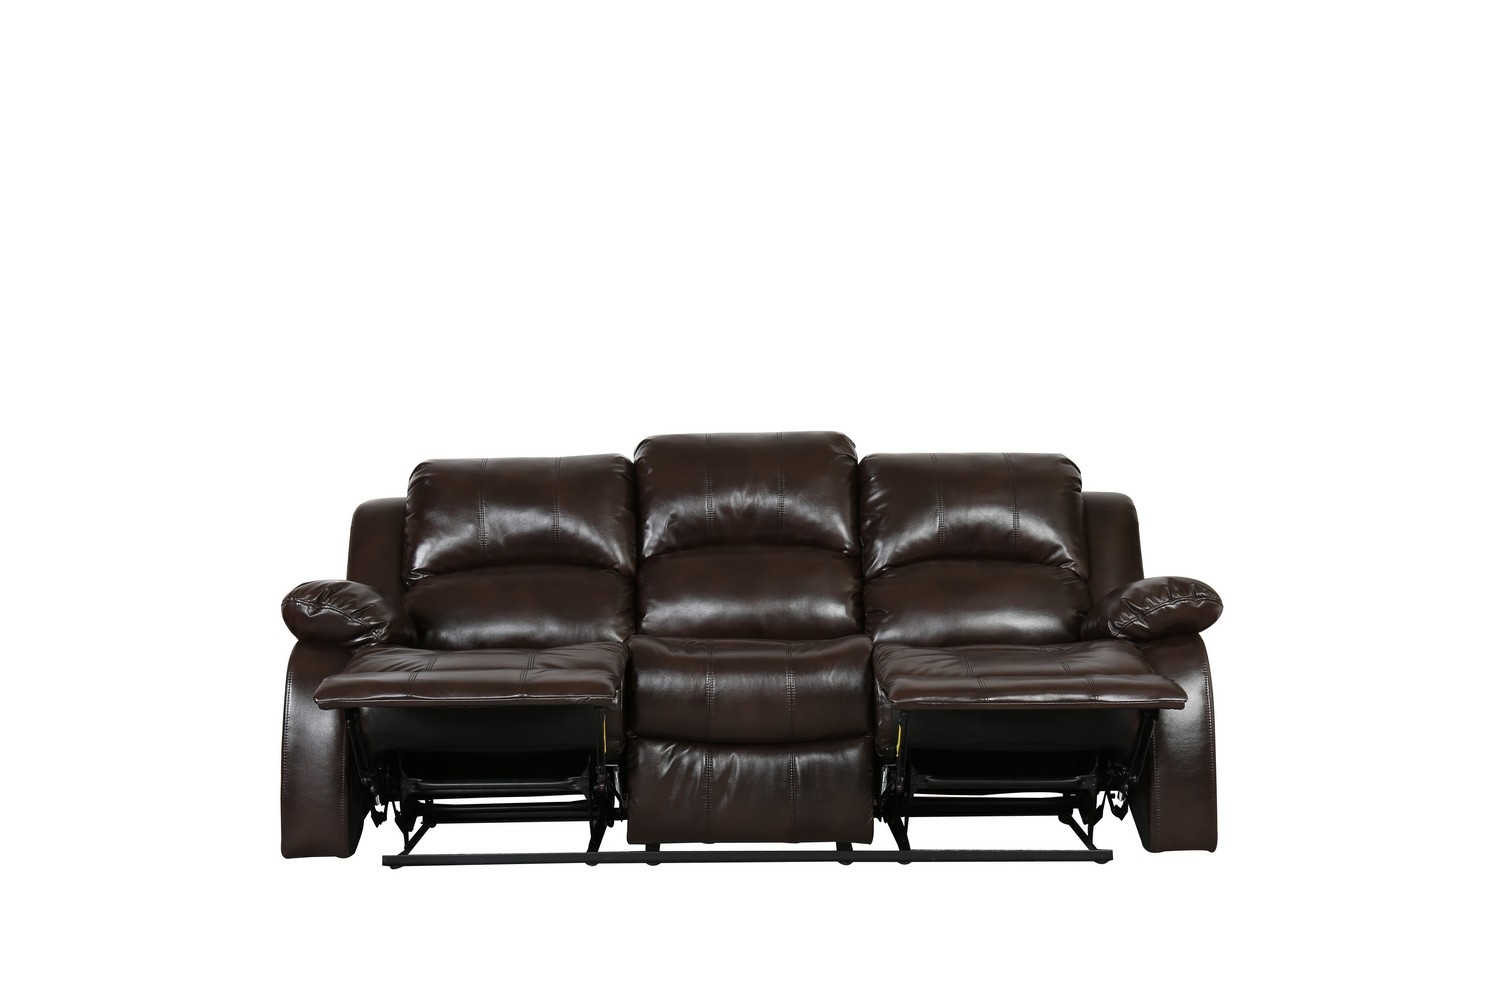 82" X 38" X 40" Brown Sofa